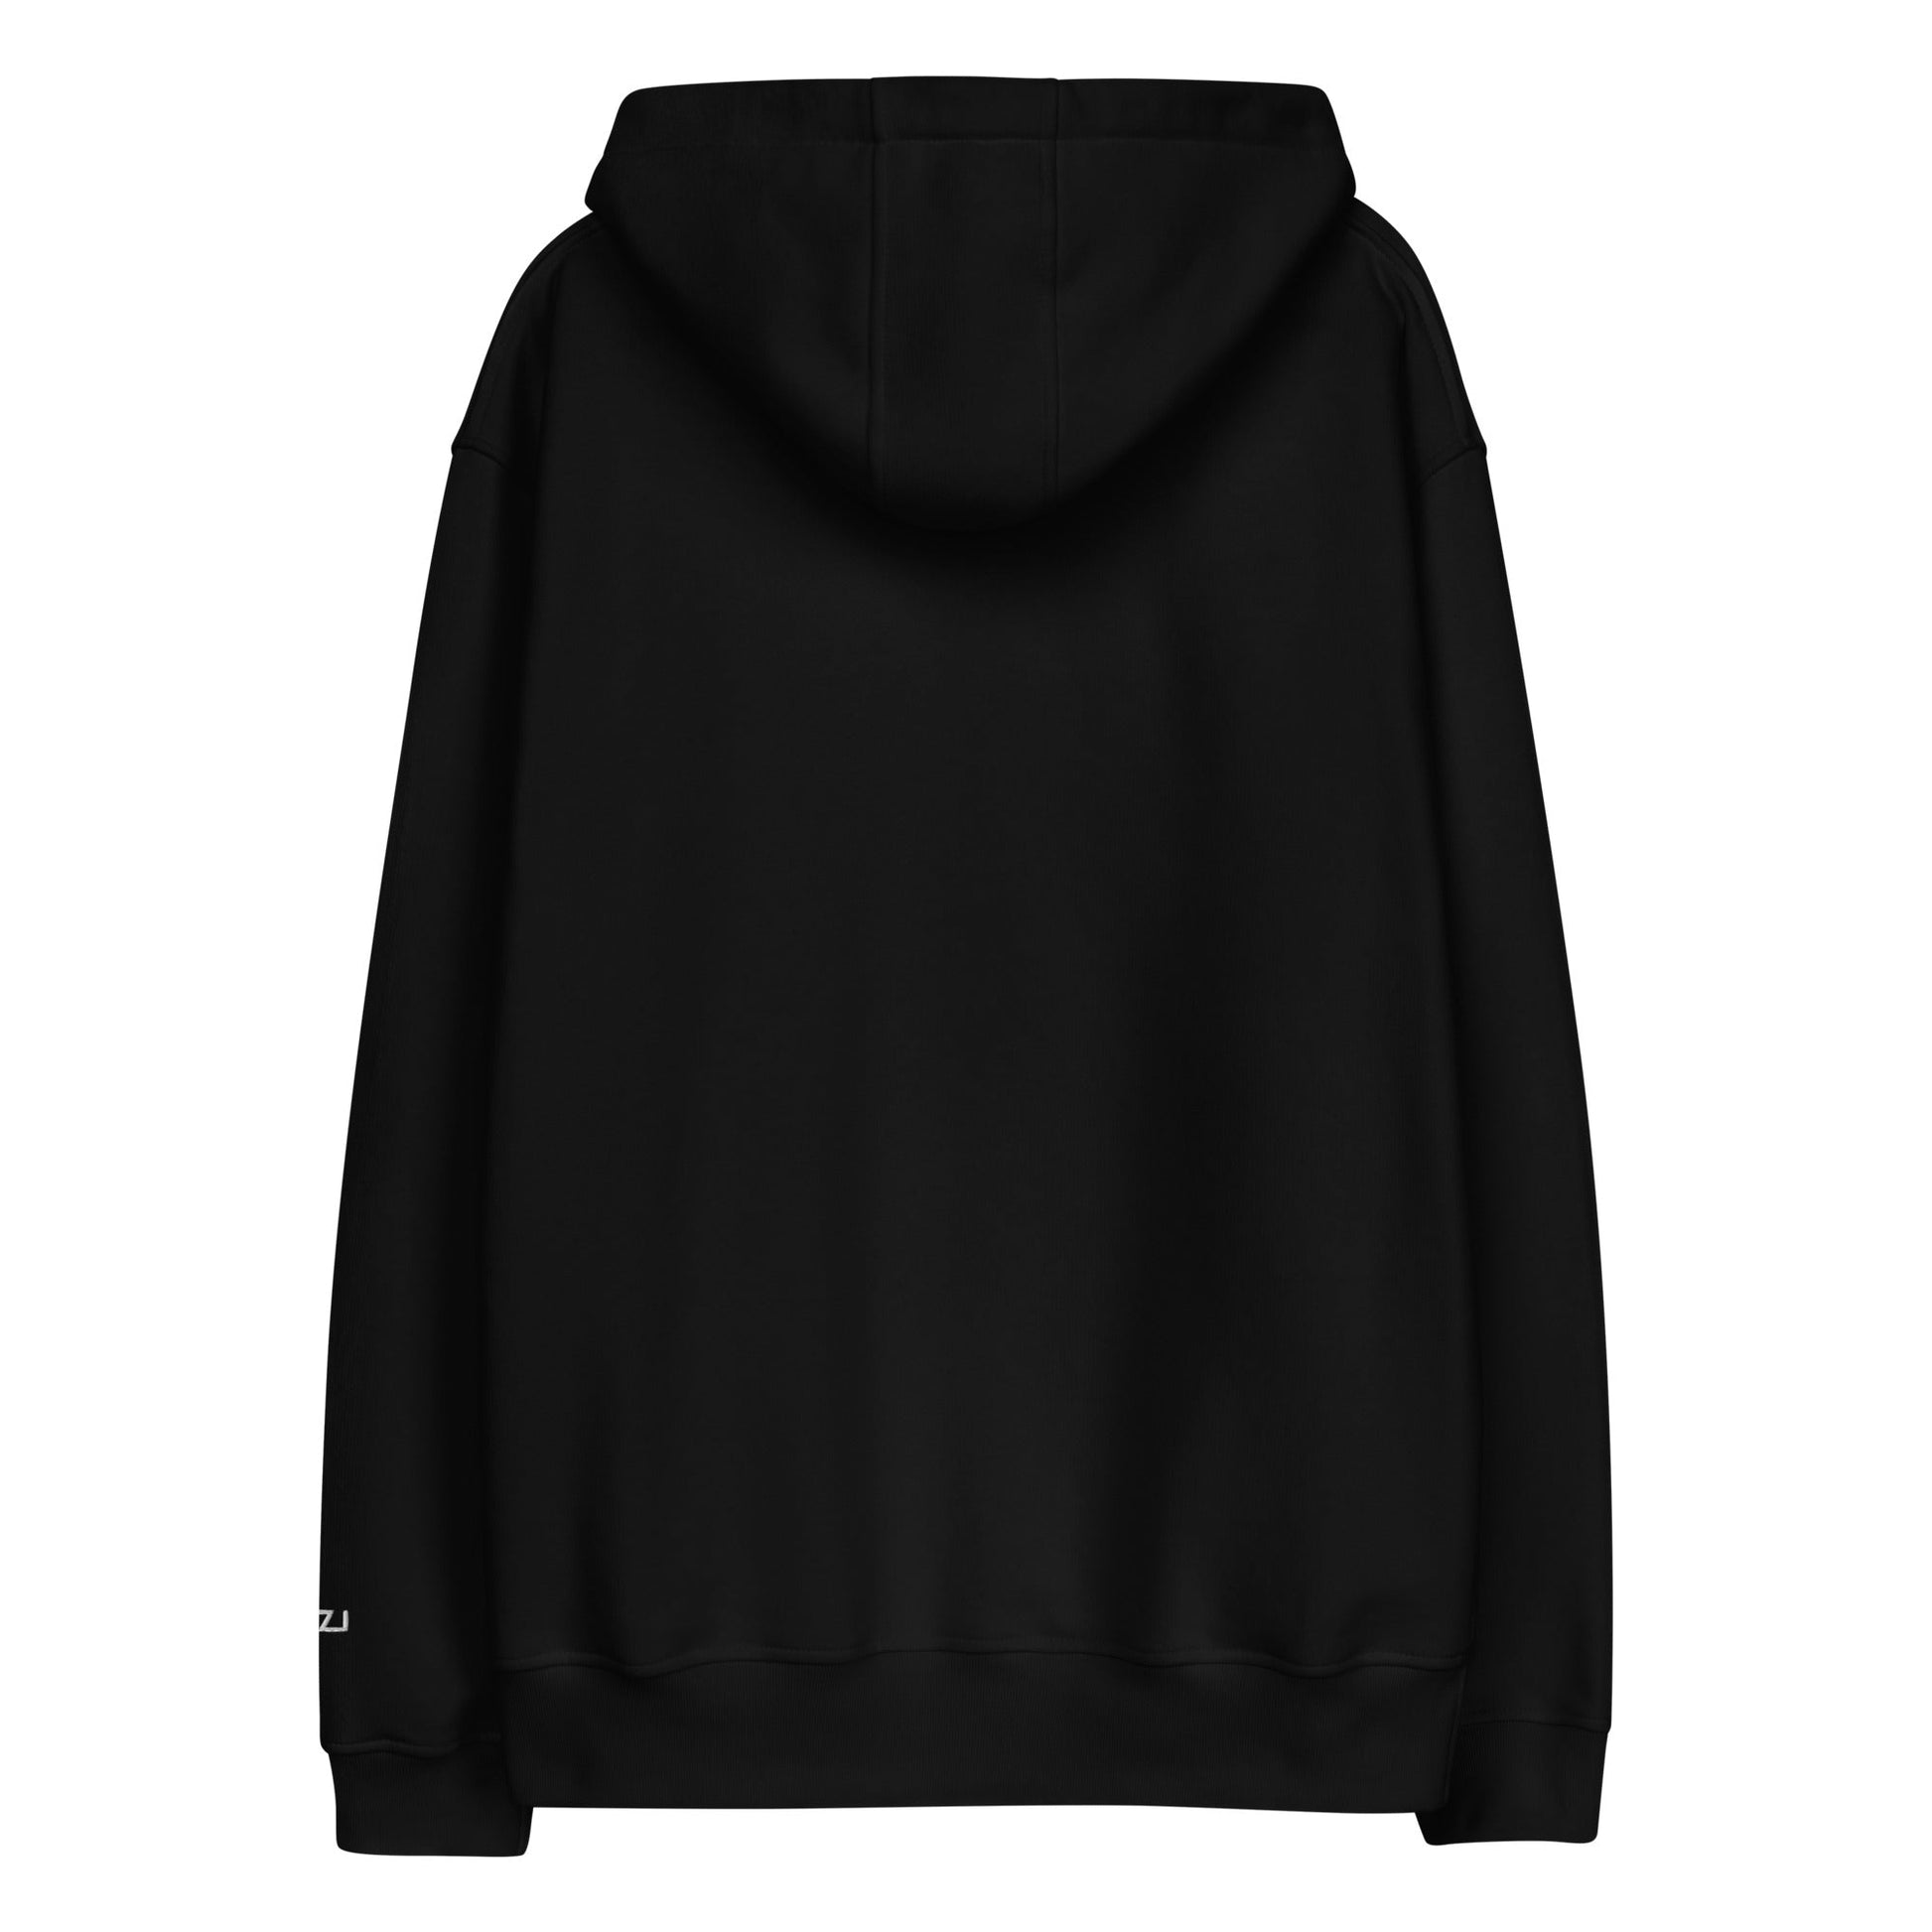 VAZZARI London - Premium Hoodie: UNISEX Hoodie - Organic, Comfortable - Vazzari Couture